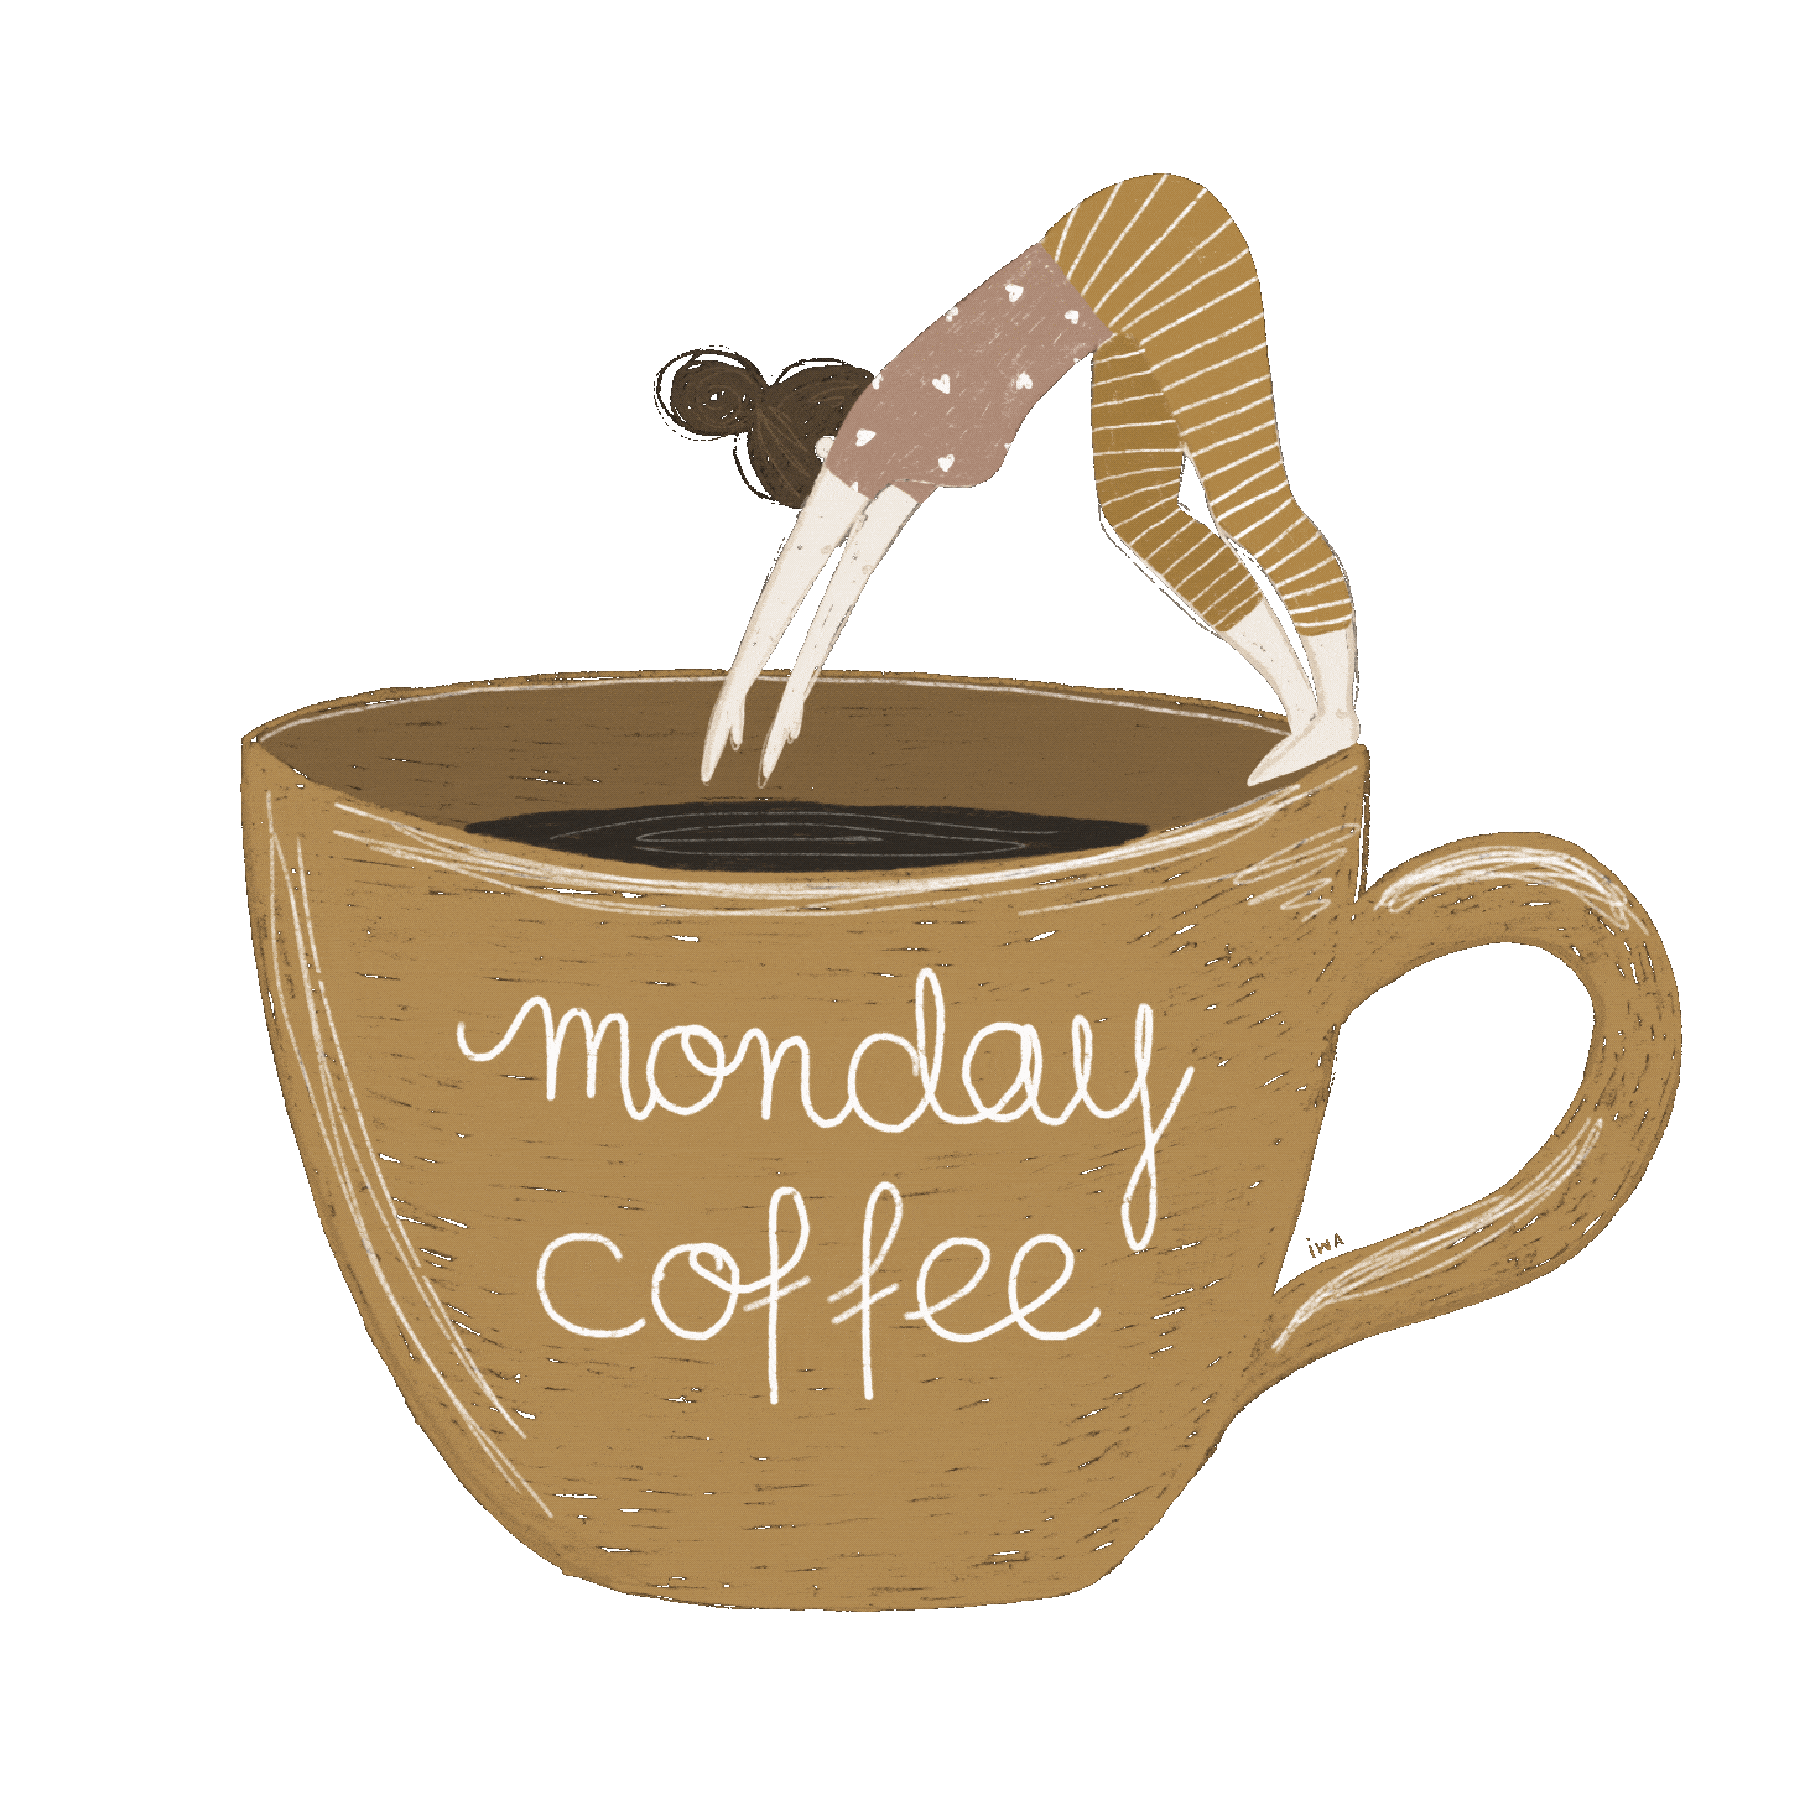 Monday Coffee Gif